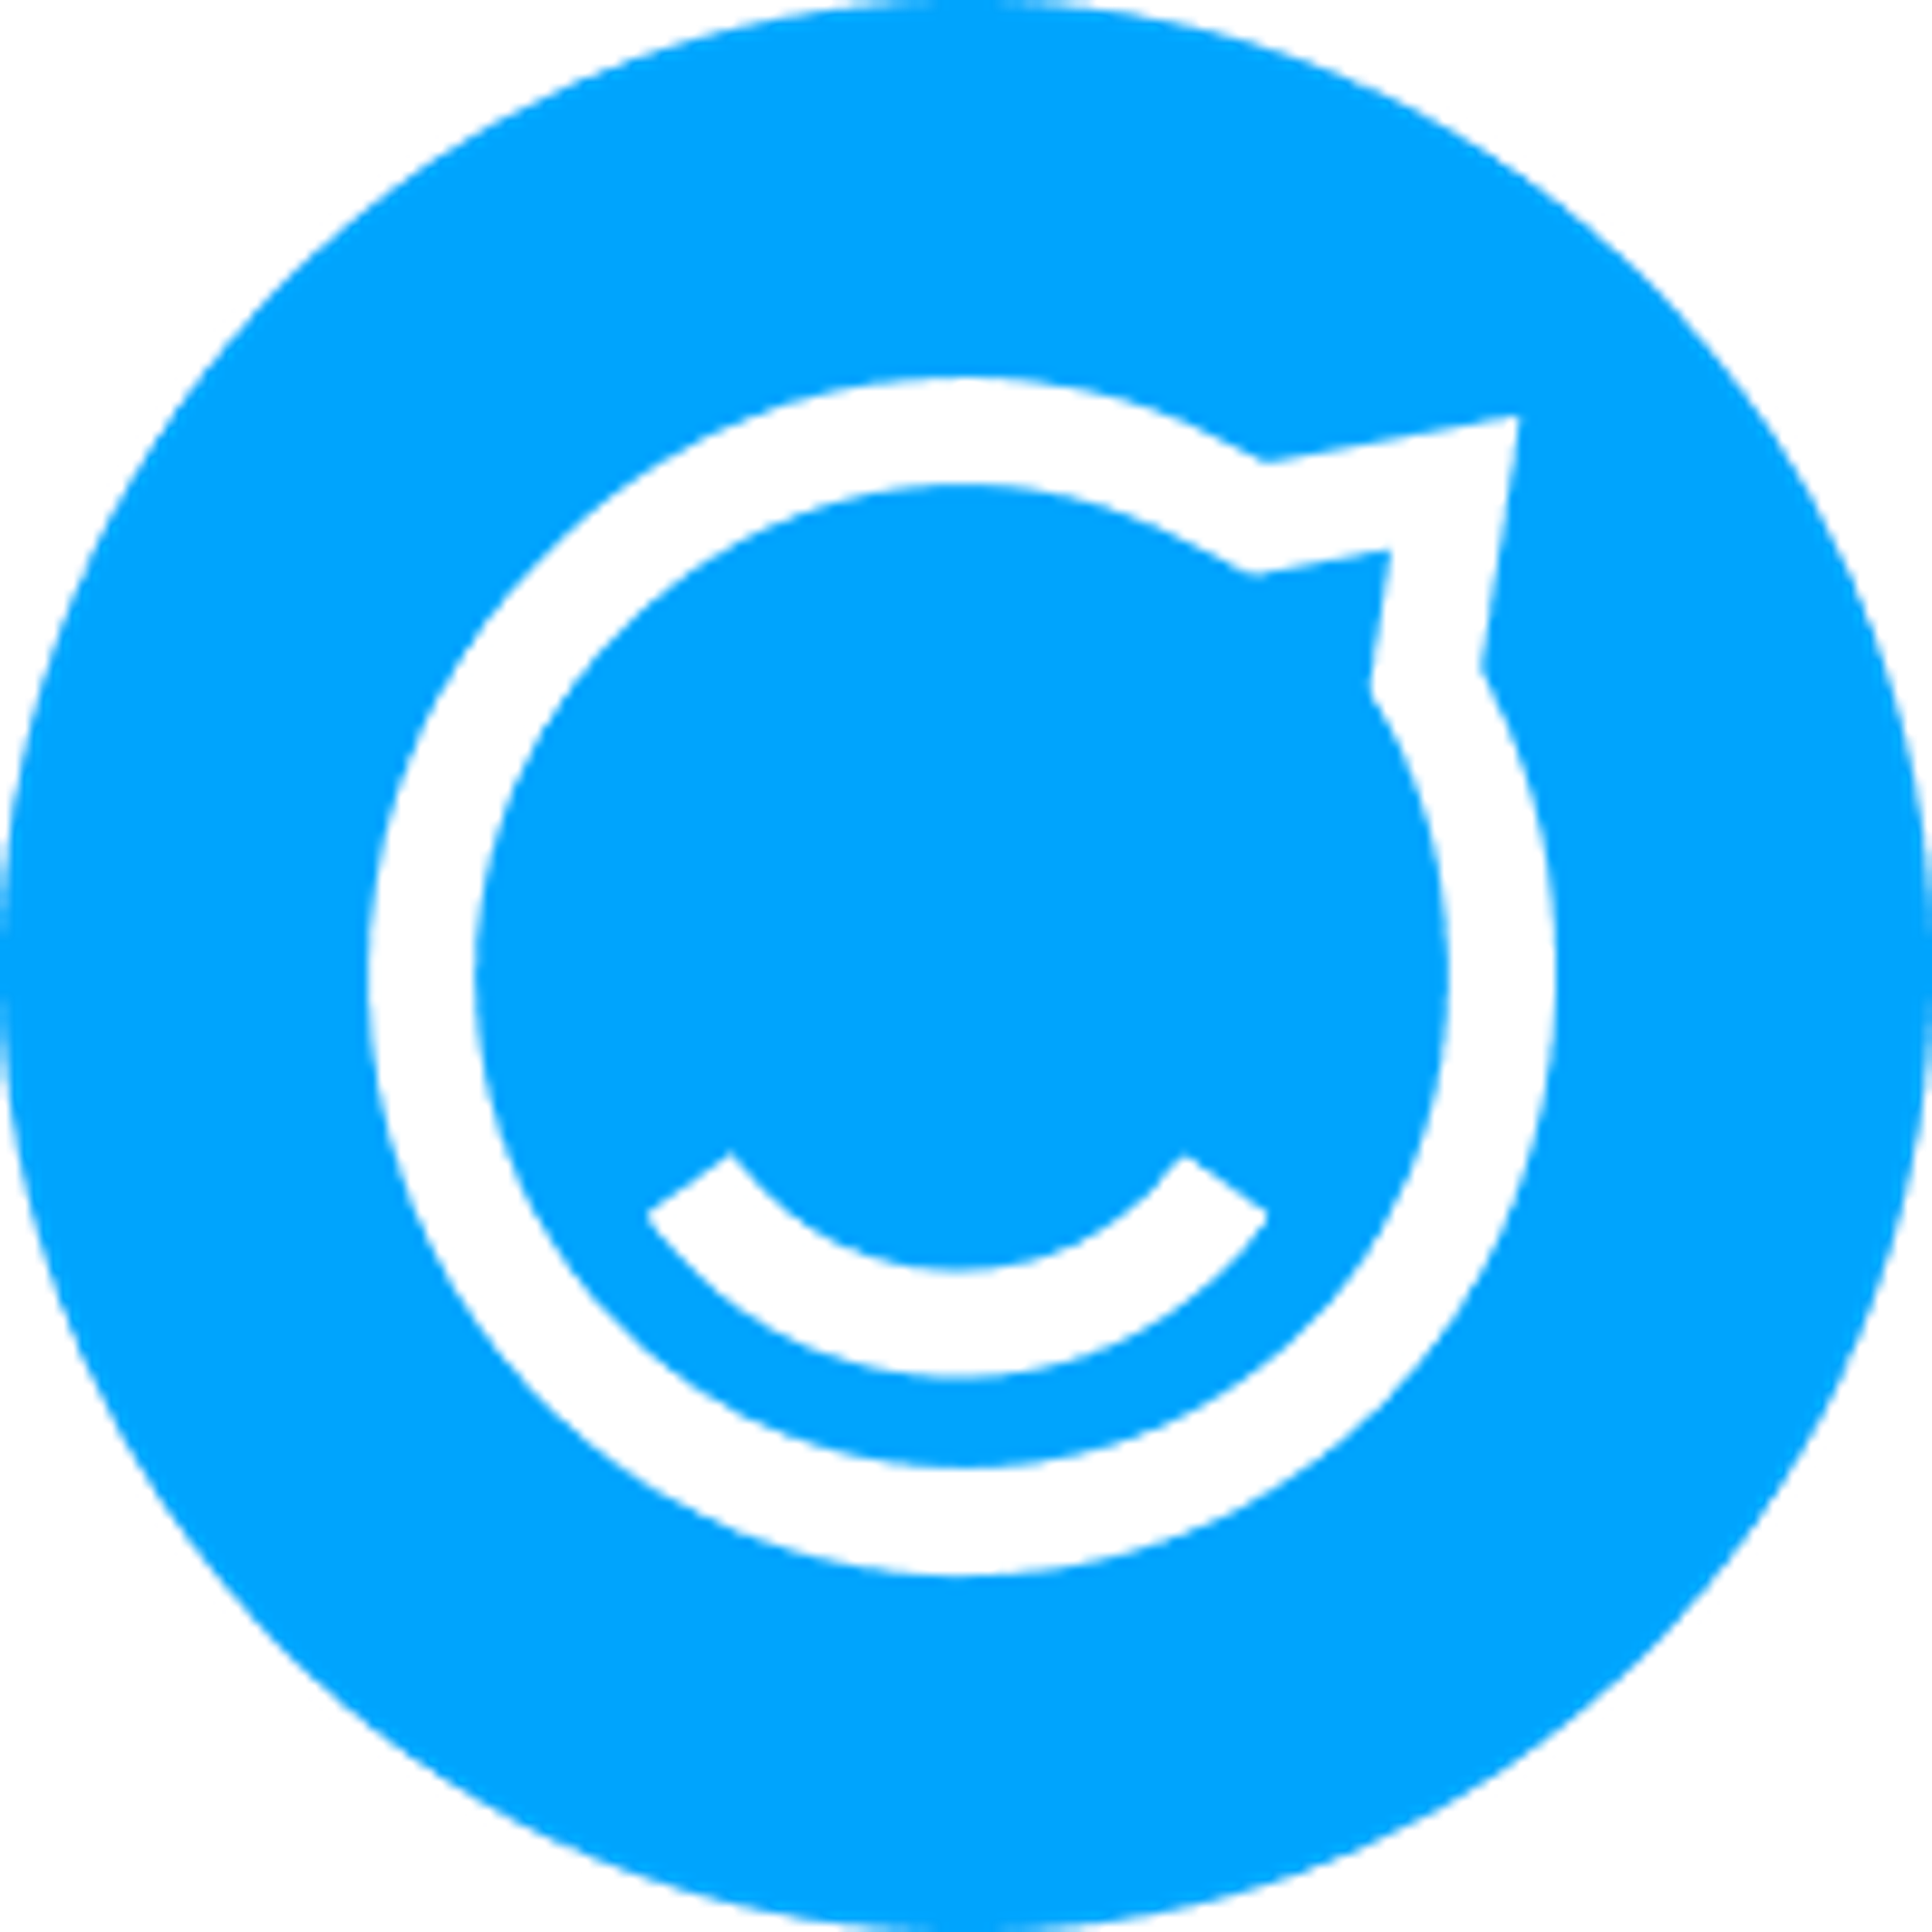 Staffbase logo icon